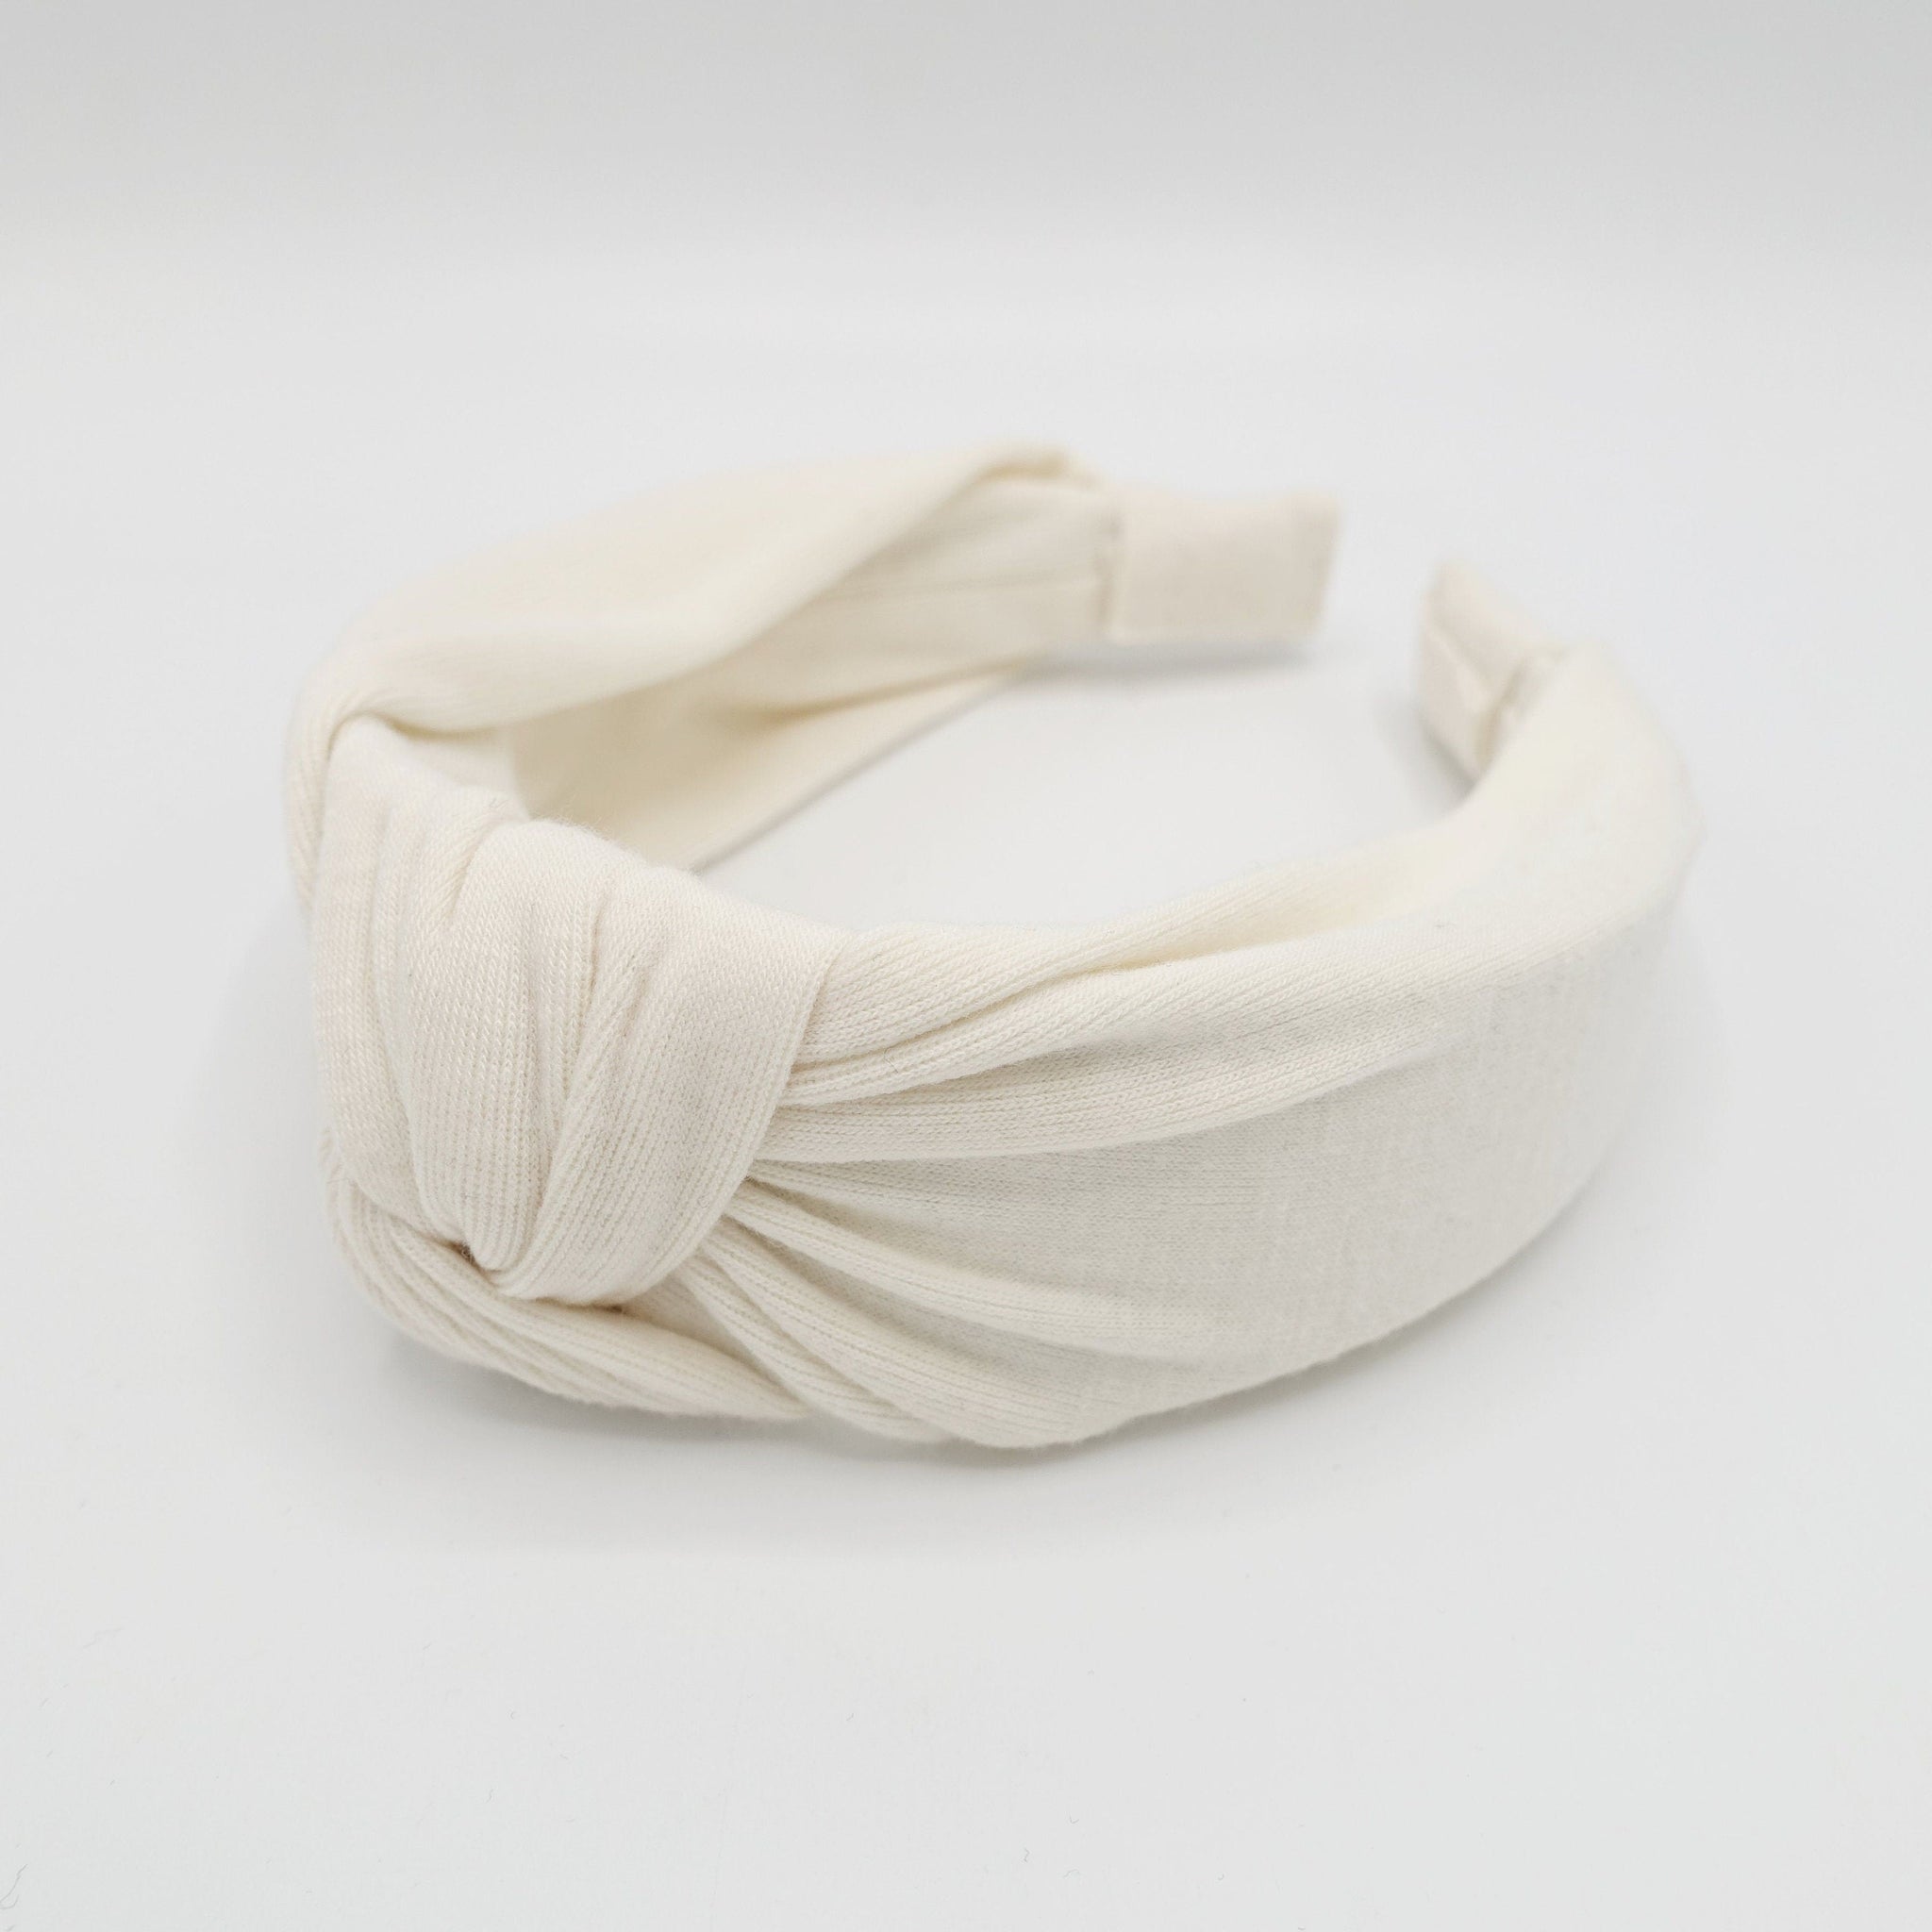 veryshine.com Cream white casual cotton top knot headband basic hairband for women